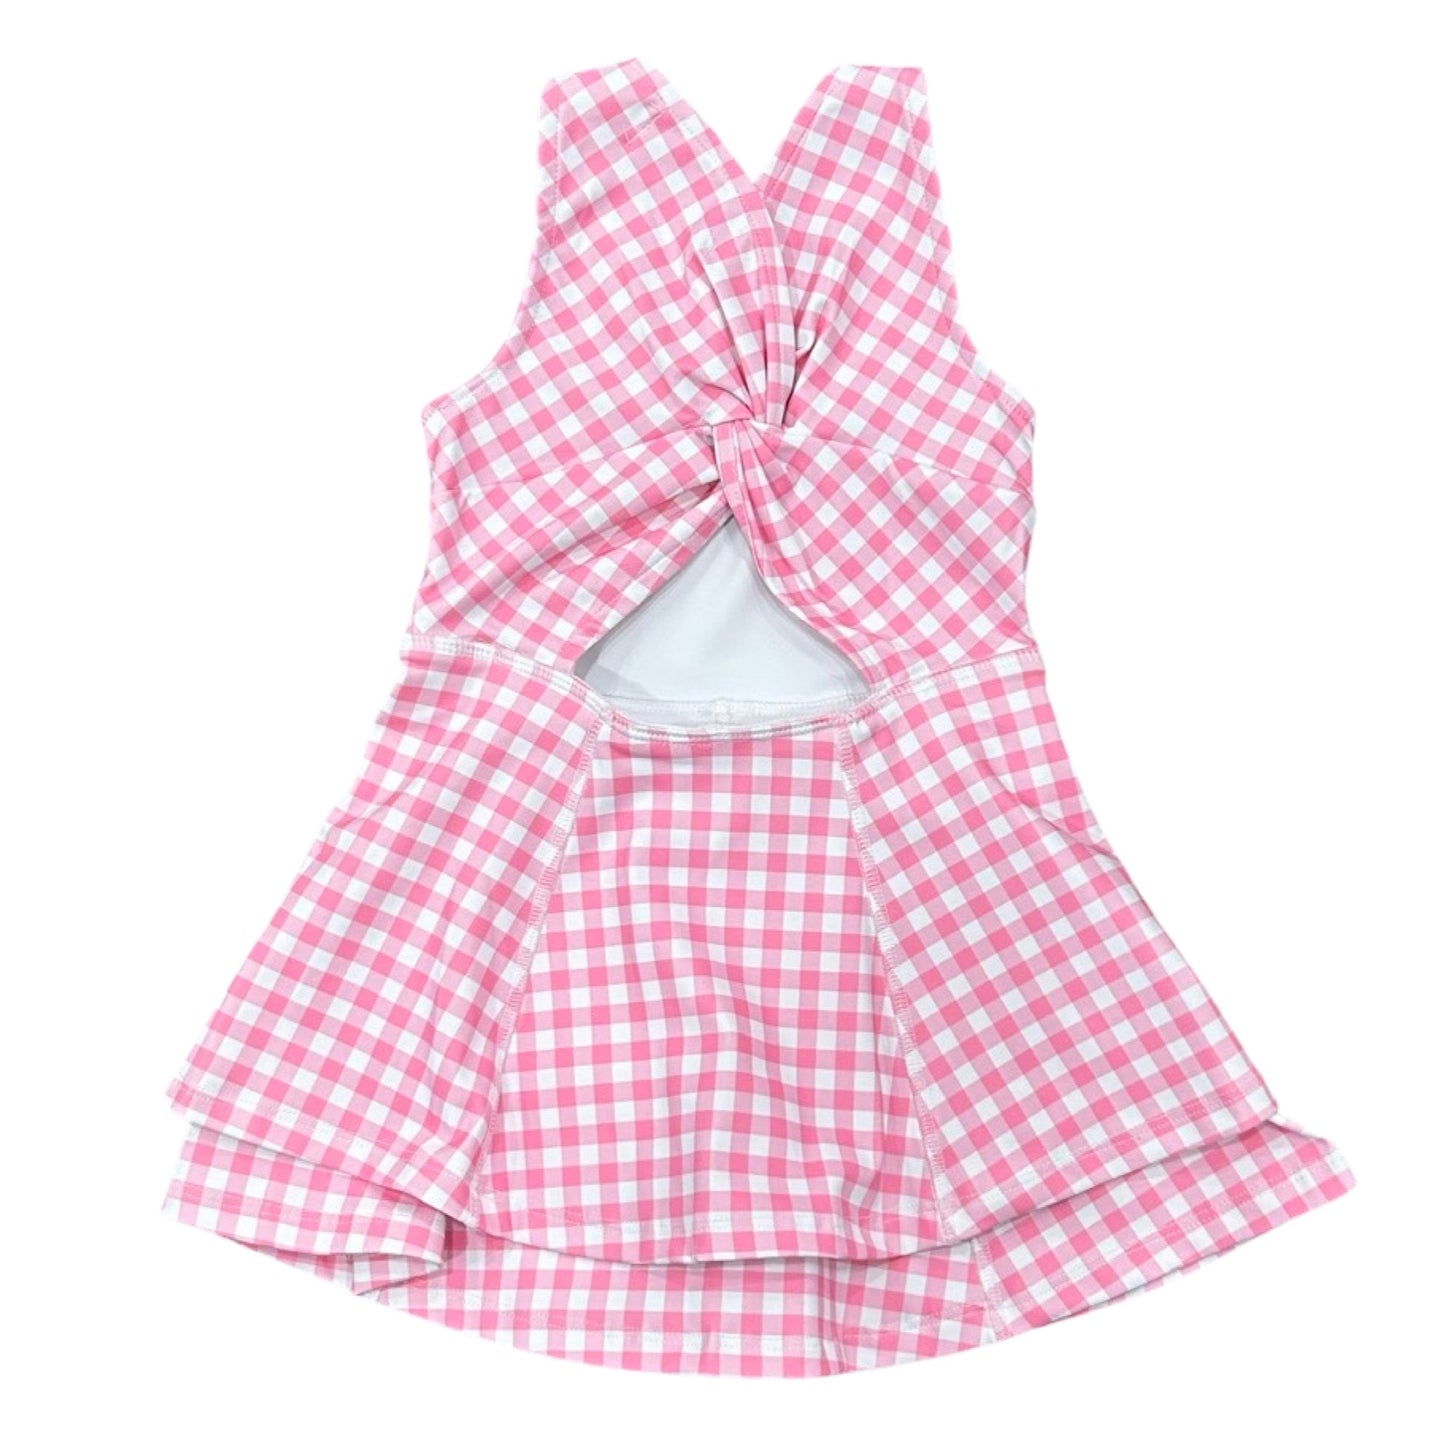 Ruffle Tennis Dress - Pink Gingham